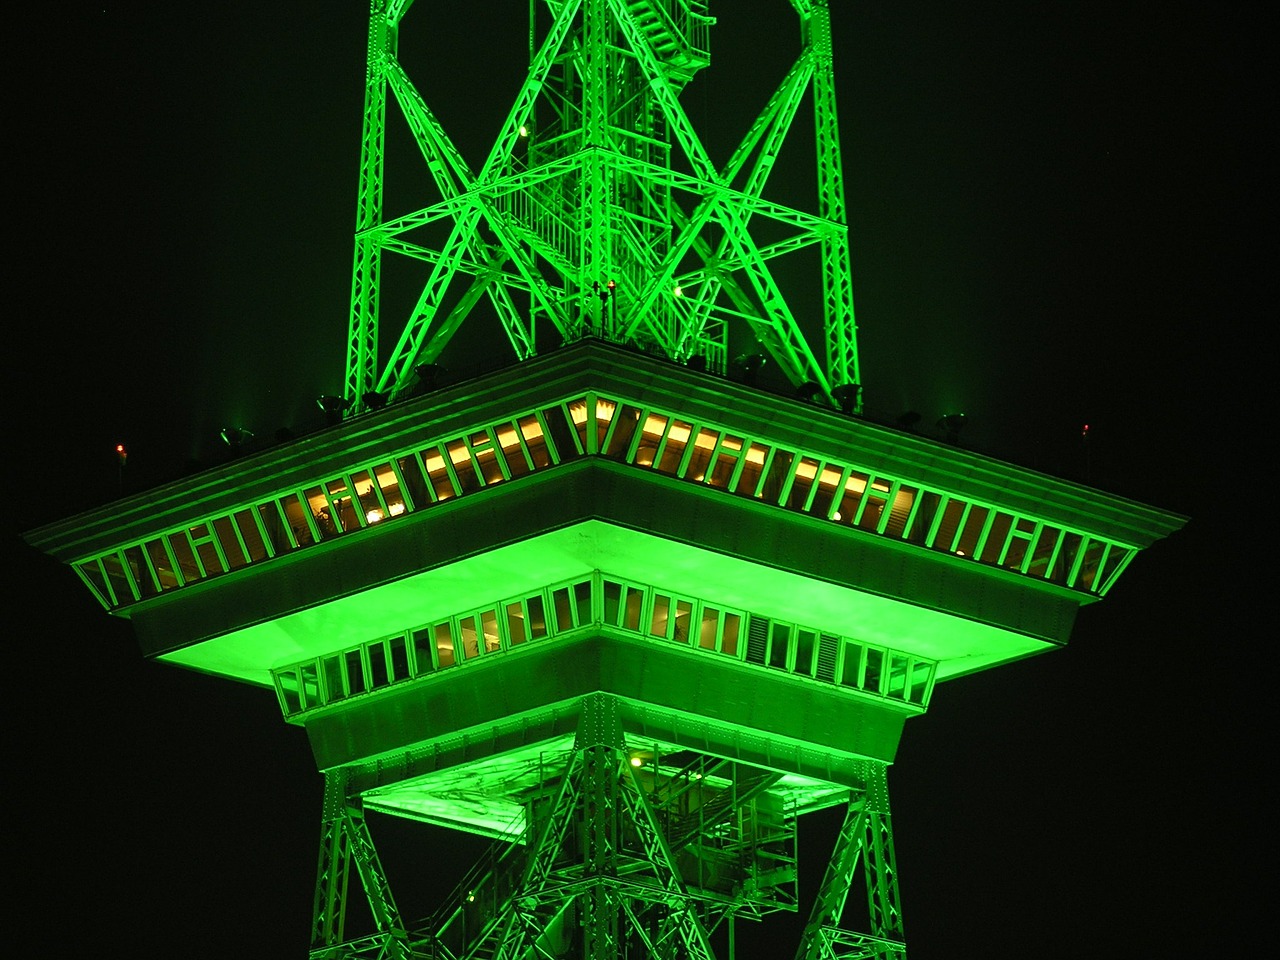 radio tower berlin night free photo